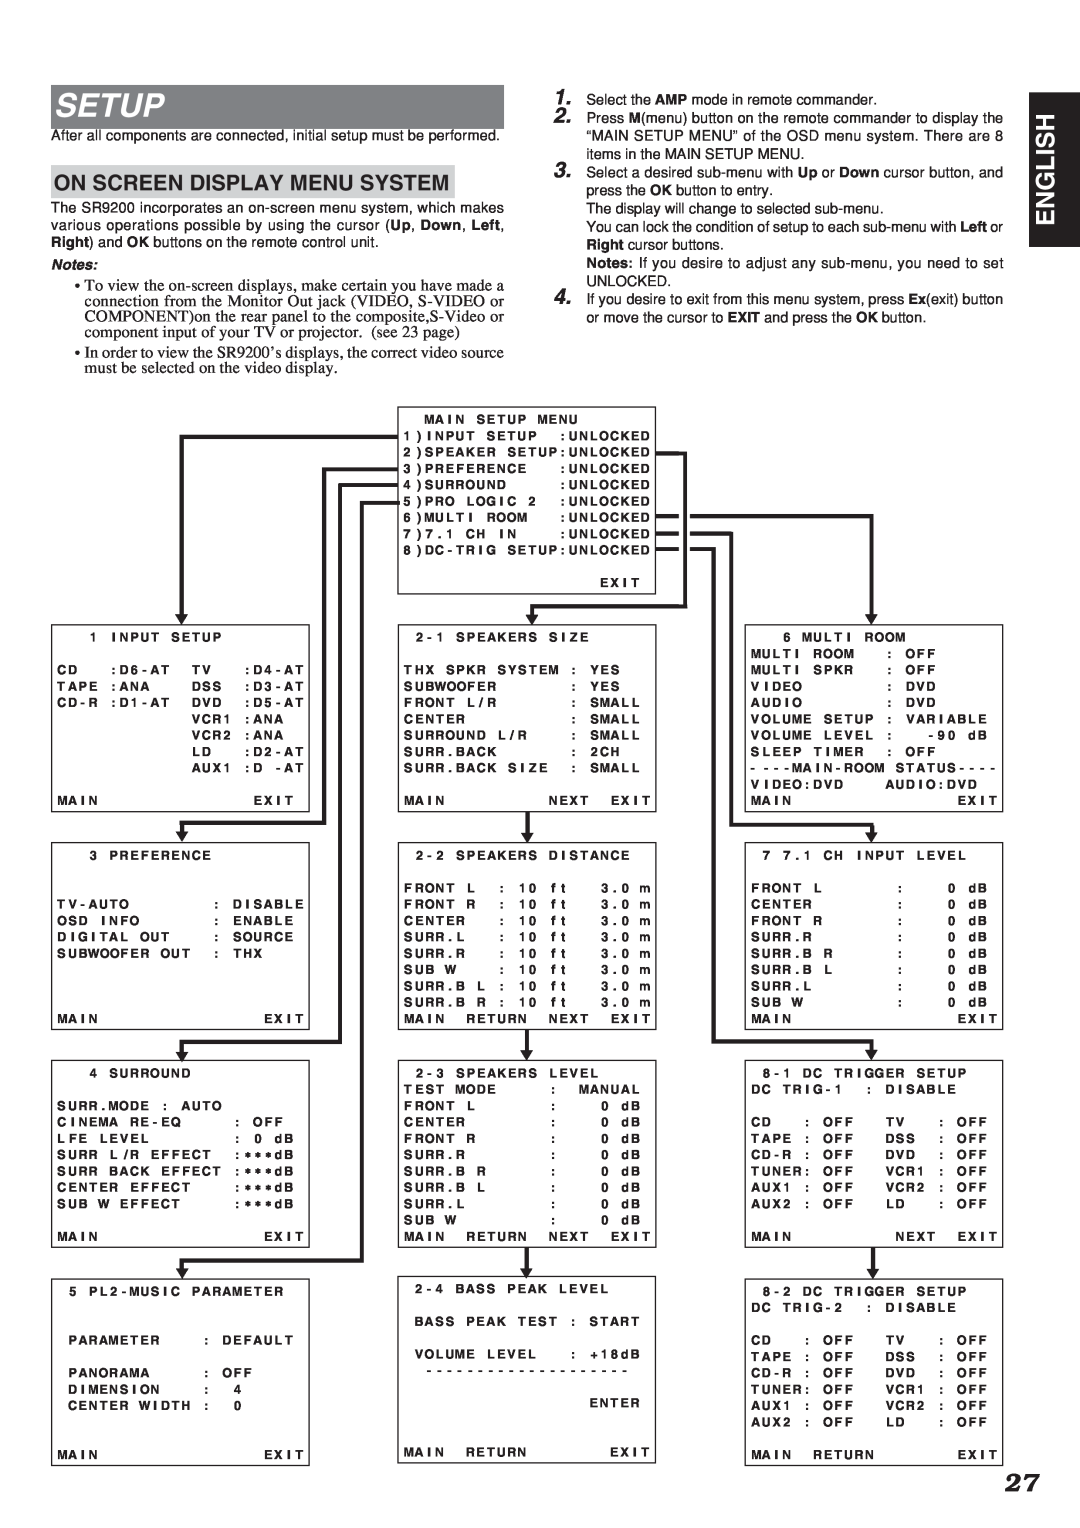 Marantz SR9200 manual Setup, English, On Screen Display Menu System 